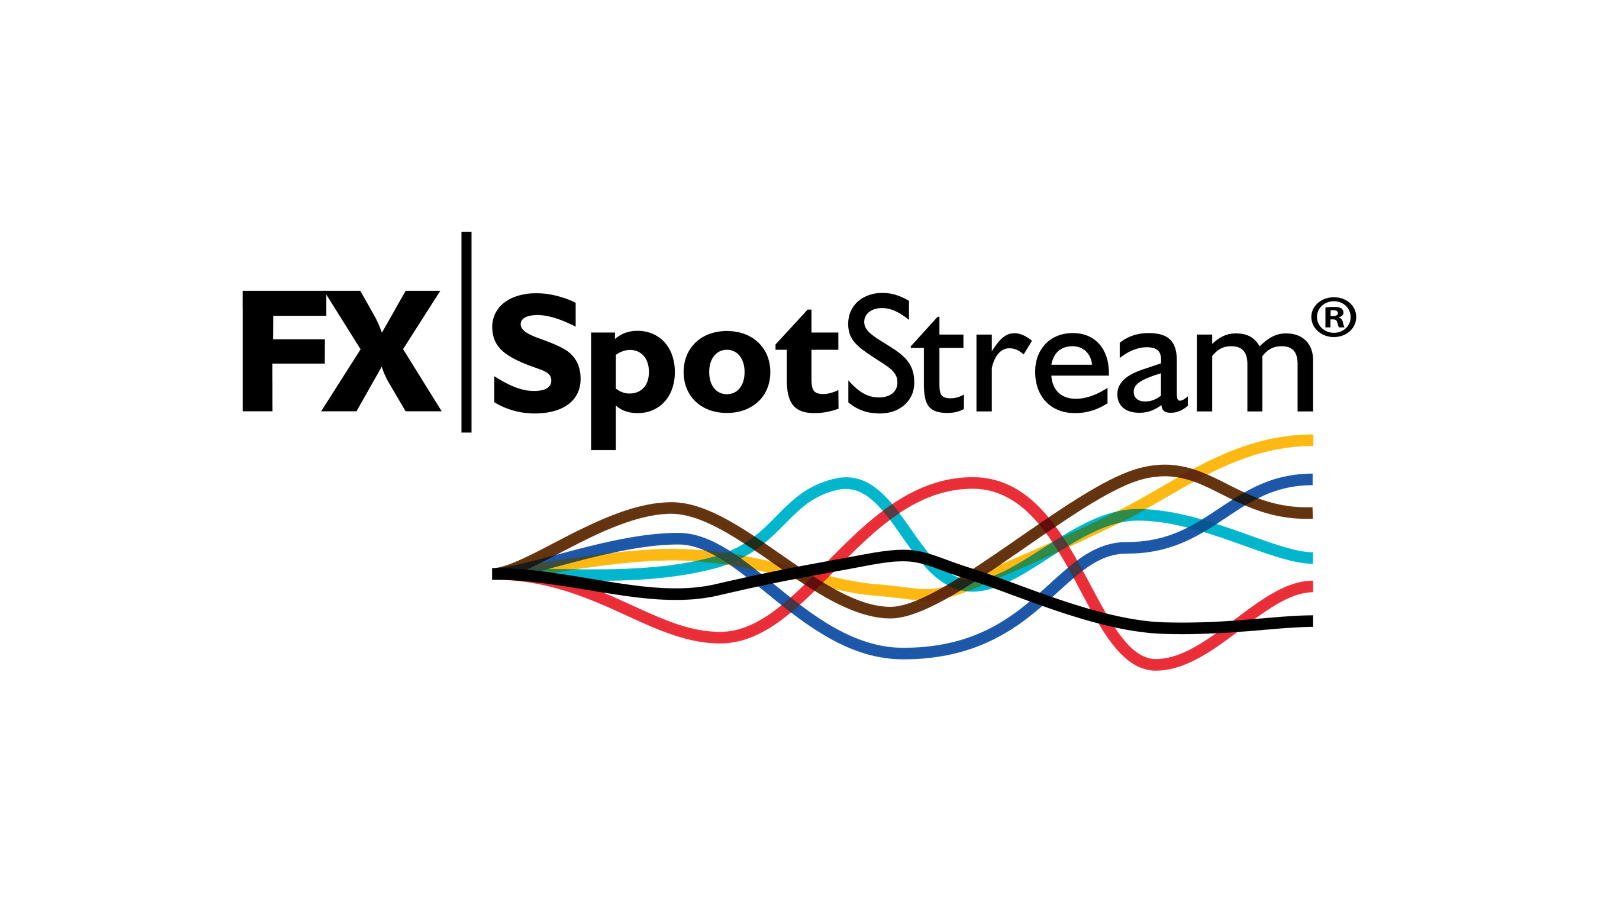 FXSpotStream Reports December 2021 Volumes, Up 0.25% On December 2020